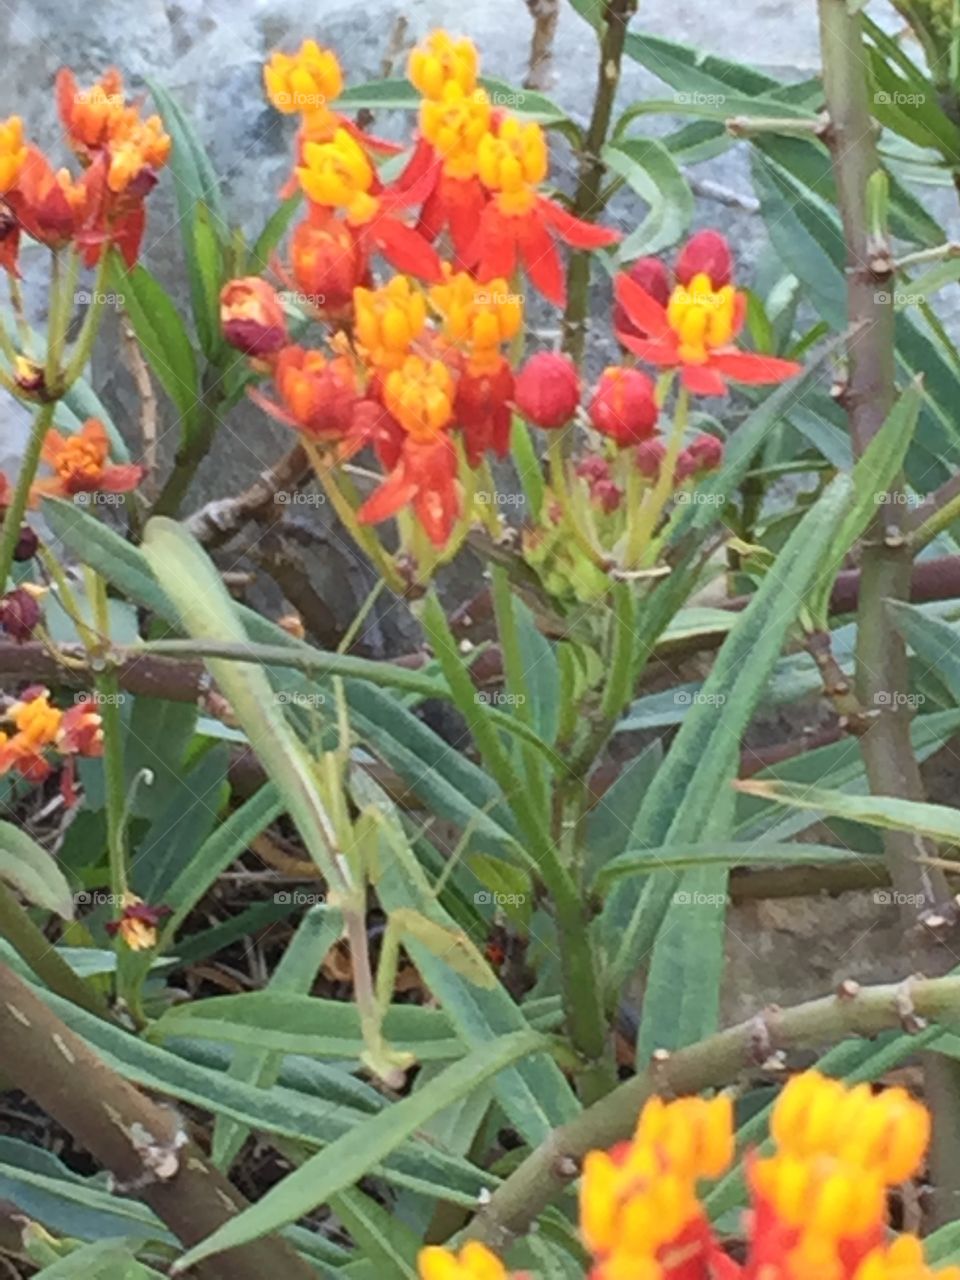 Preying mantis among the flowers 